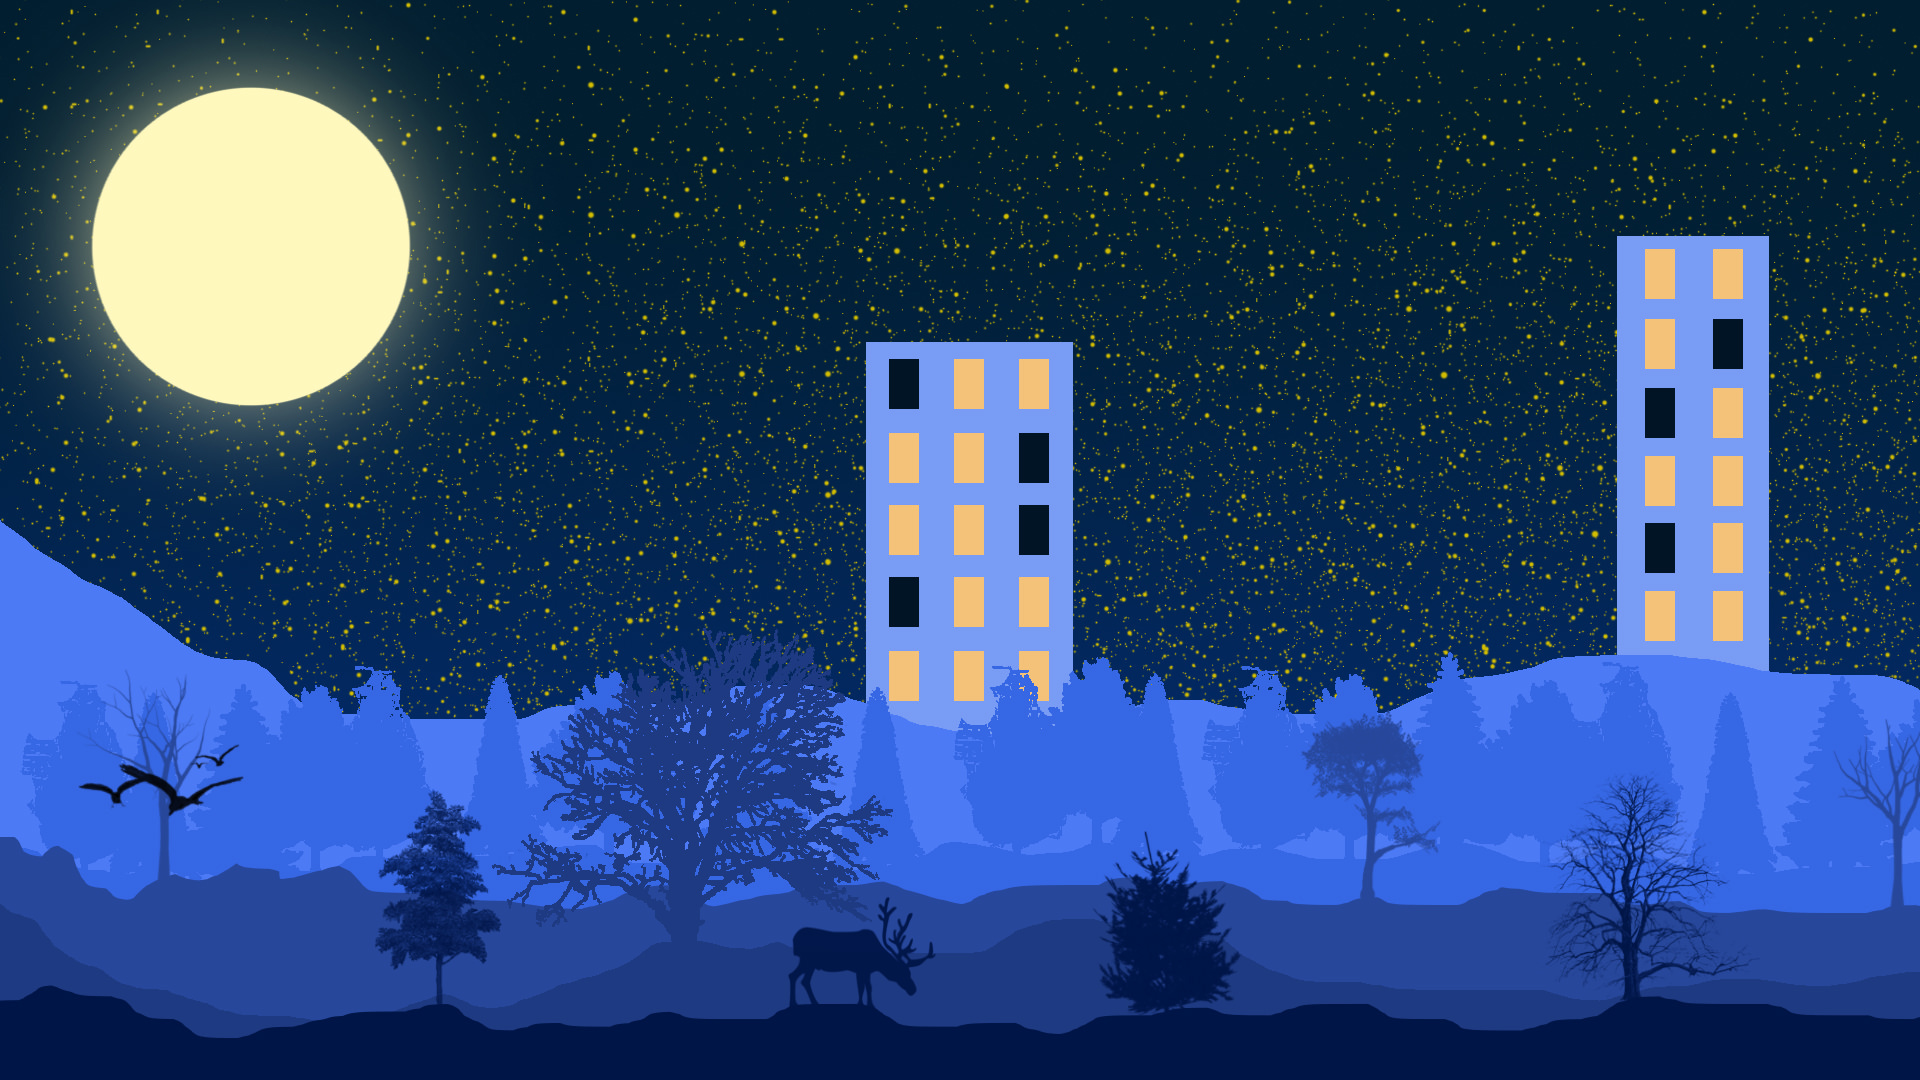 Digital Art Artwork Minimalism Blue Building Block Of Flats Moon Moonlight Stars Night Trees Birds D 1920x1080